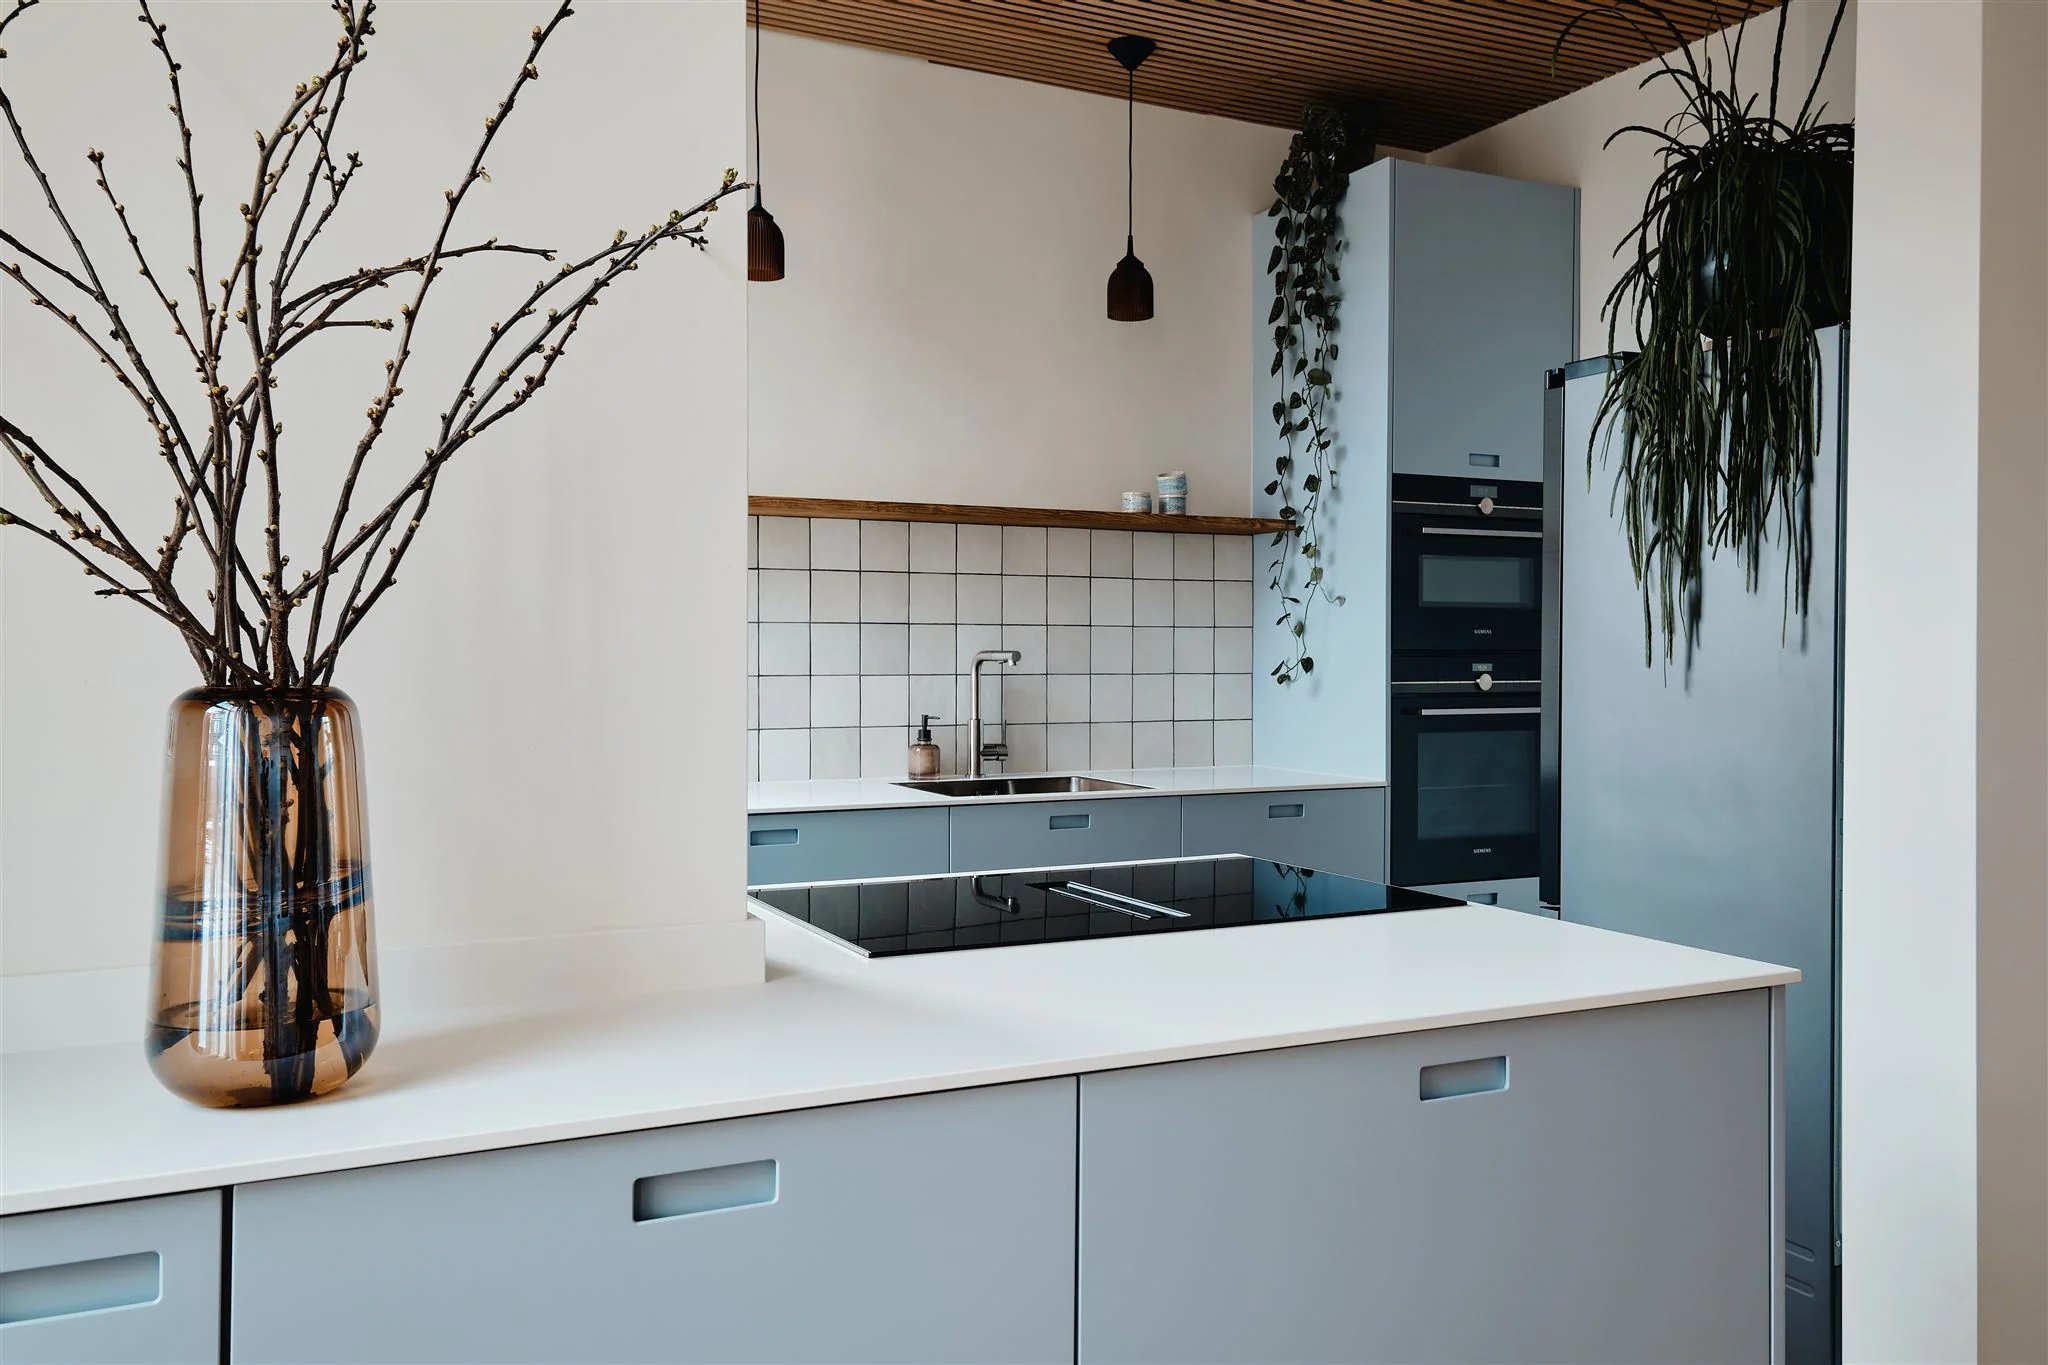 Farrow & Ball keukenfronten voor IKEA keuken